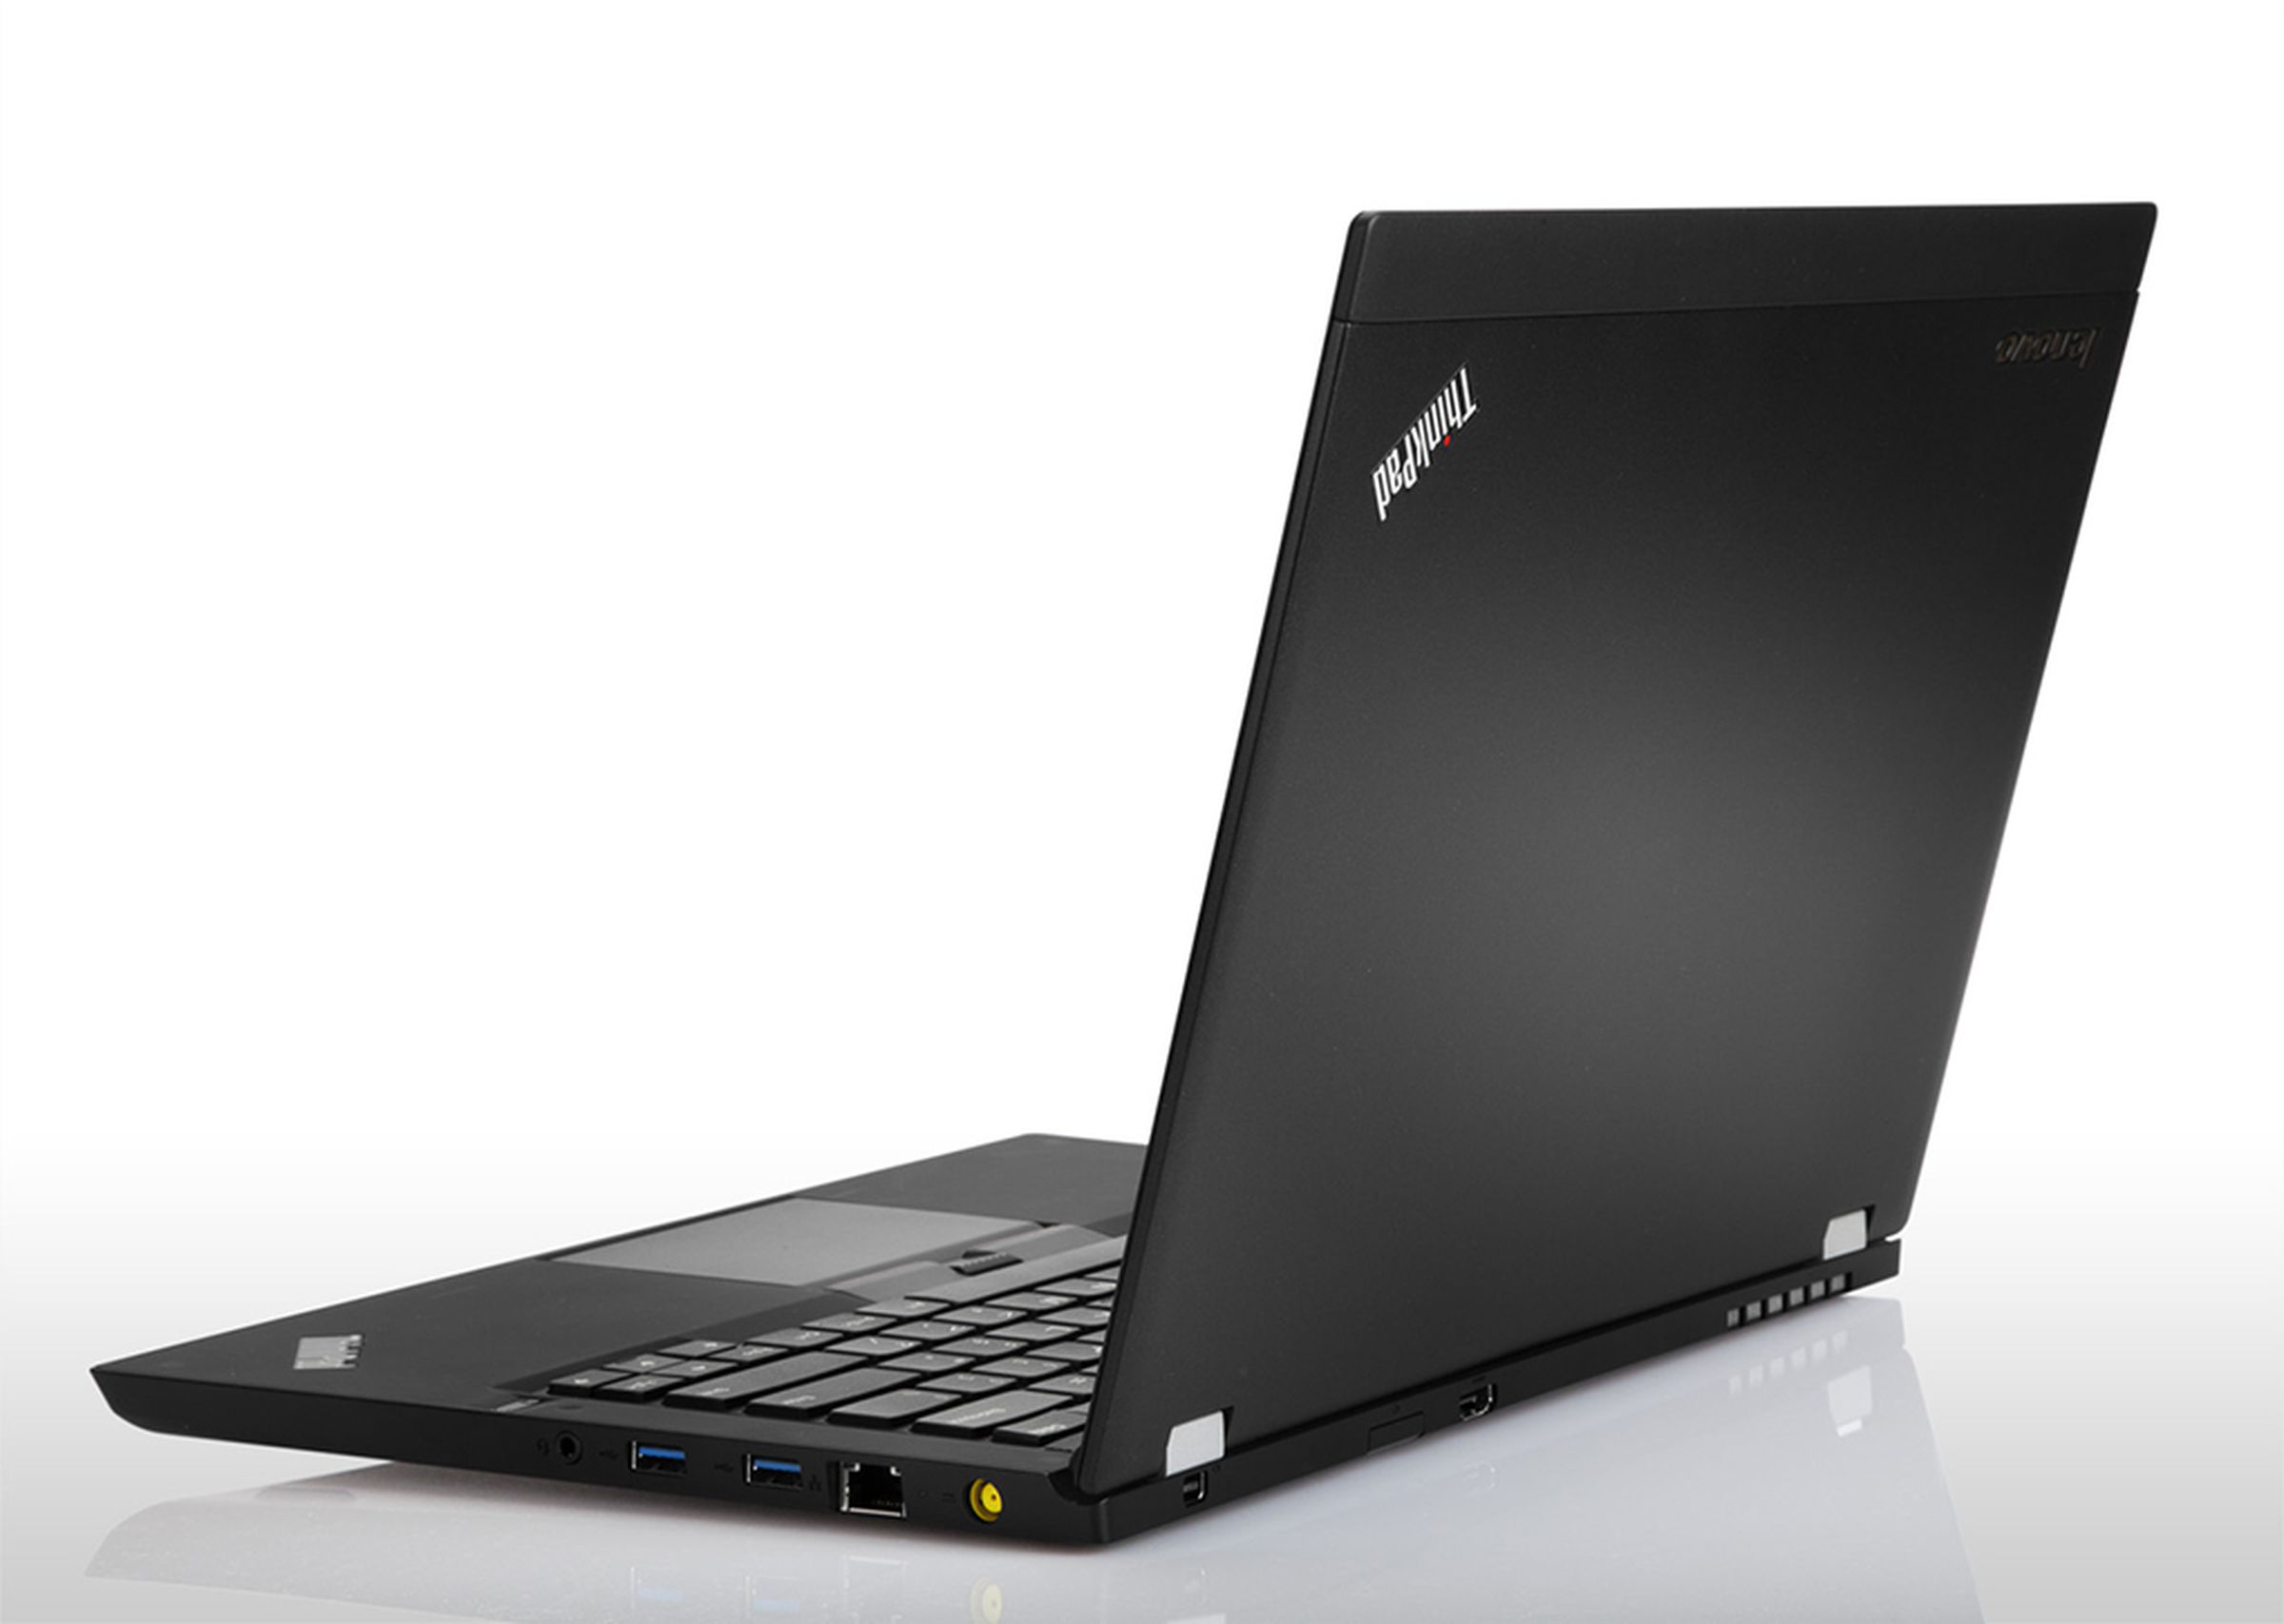 Lenovo ThinkPad T430u press pictures